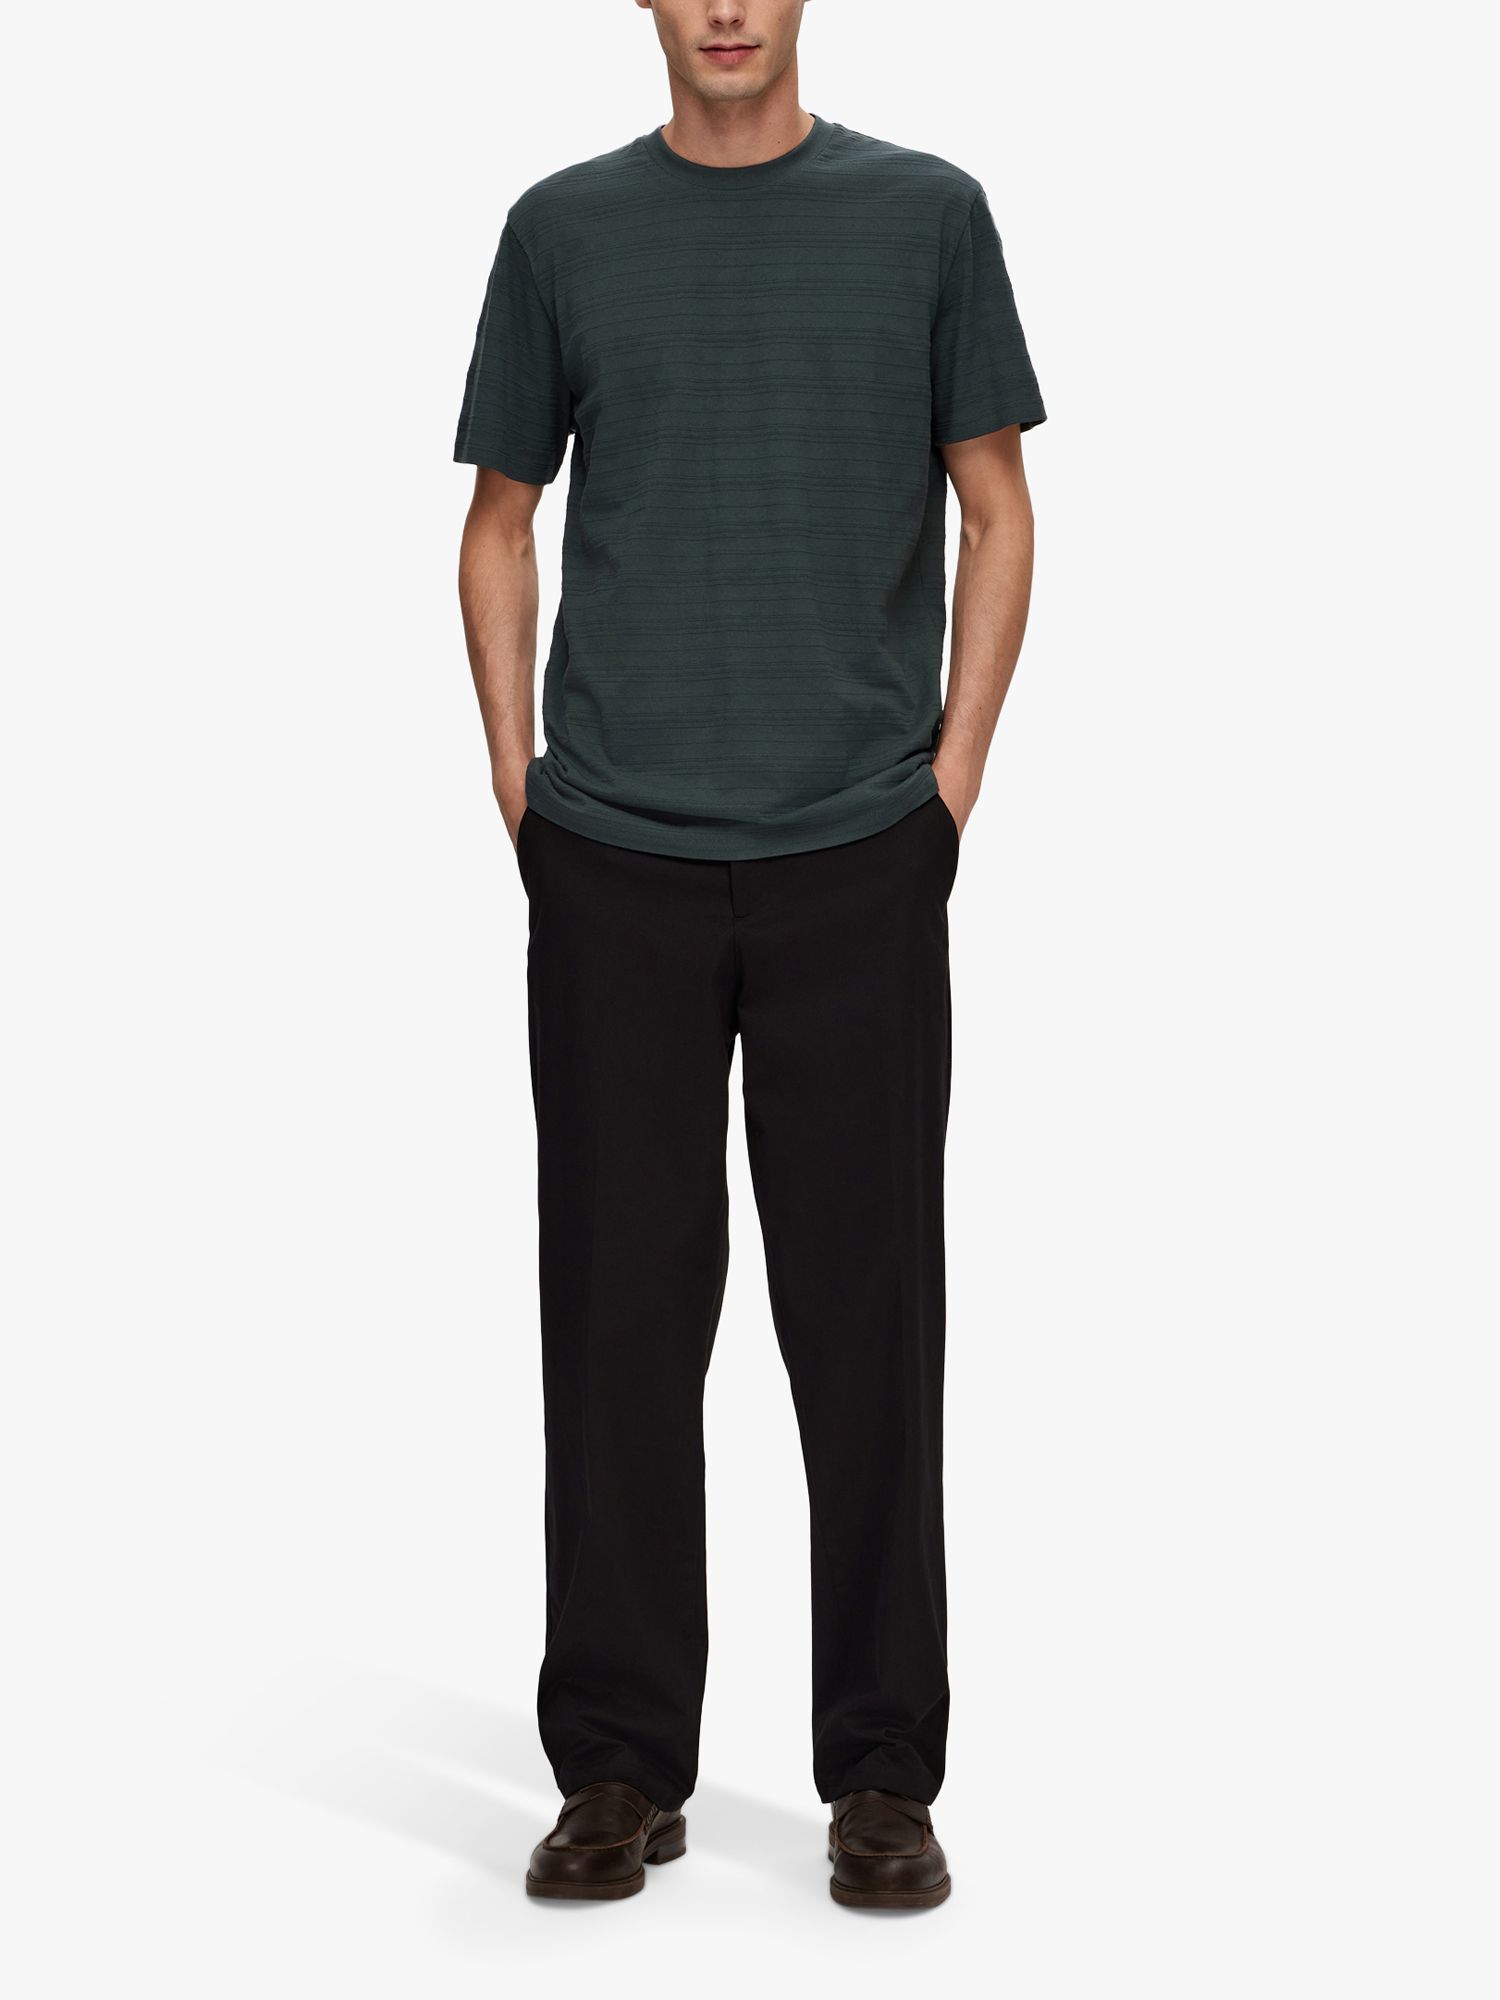 SELECTED HOMME Jacquard Short Sleeve T-Shirt, Green